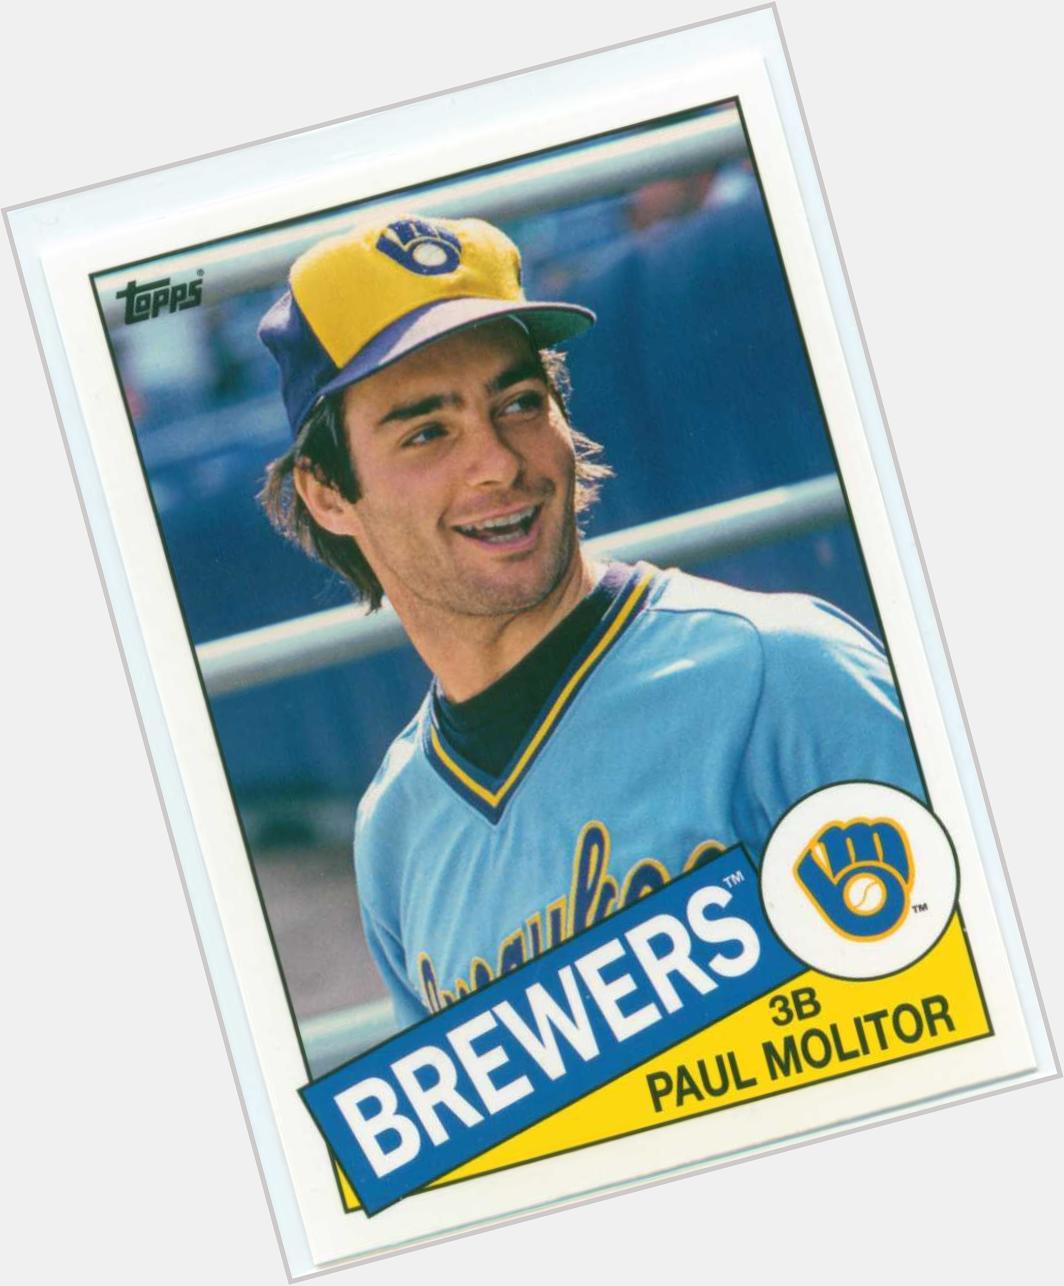 Happy birthday to Hall of Famer Paul Molitor 